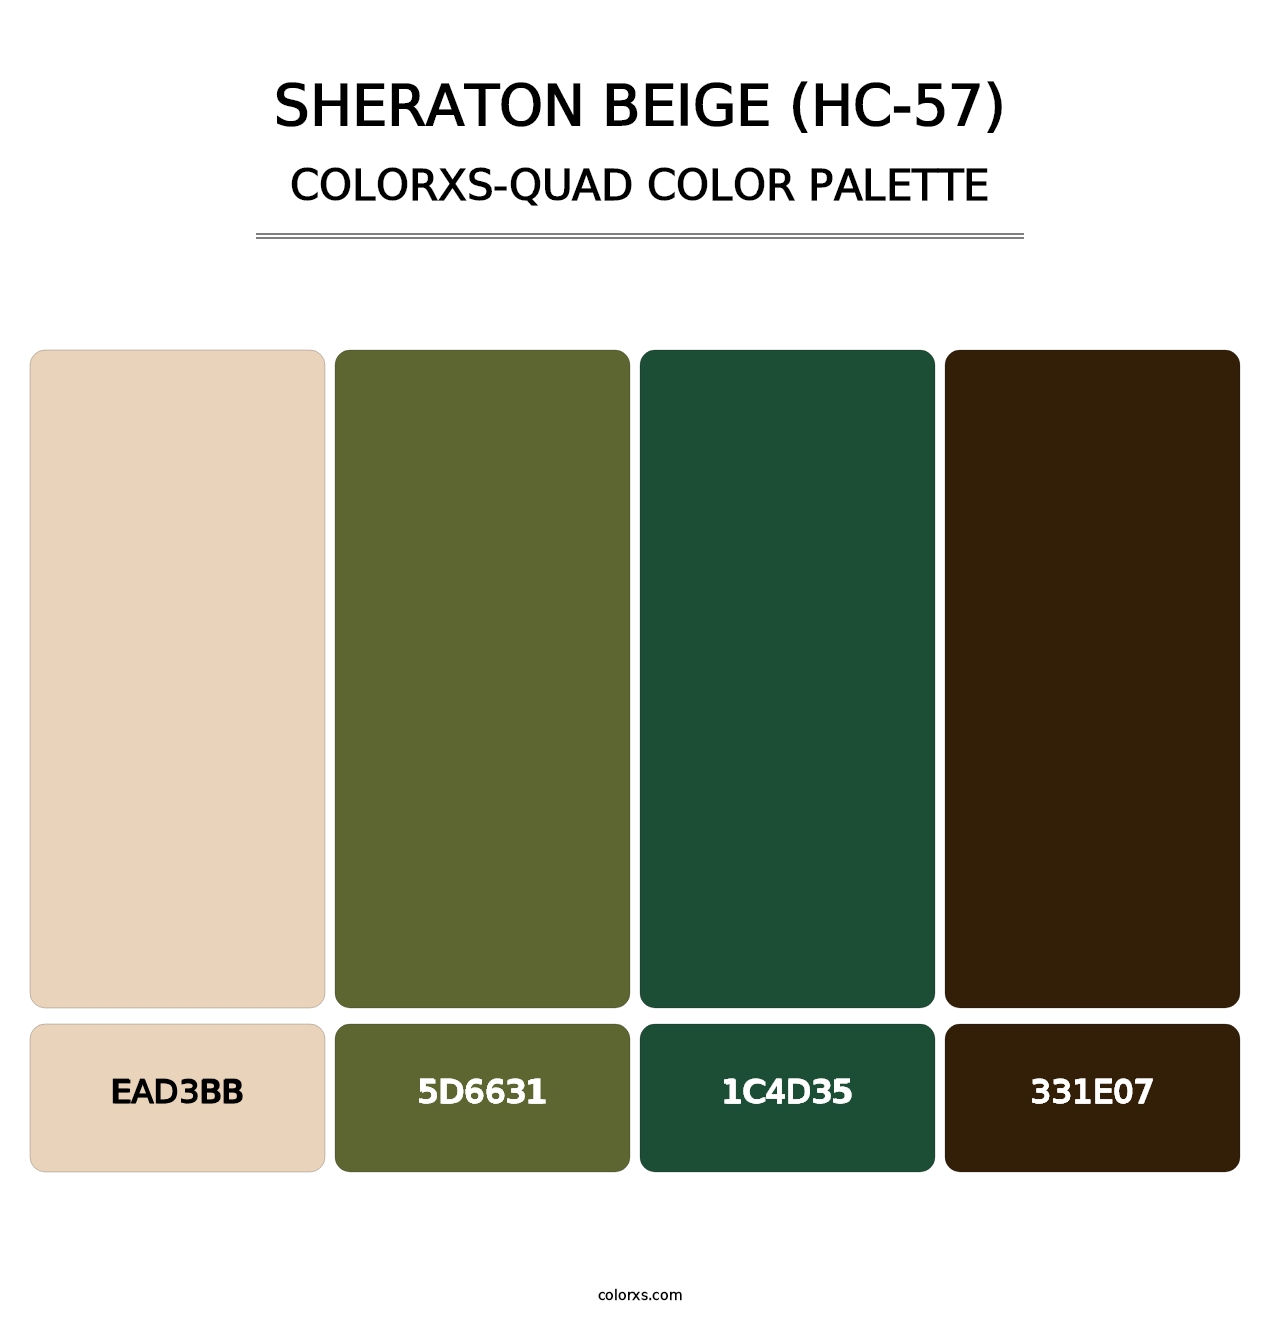 Sheraton Beige (HC-57) - Colorxs Quad Palette